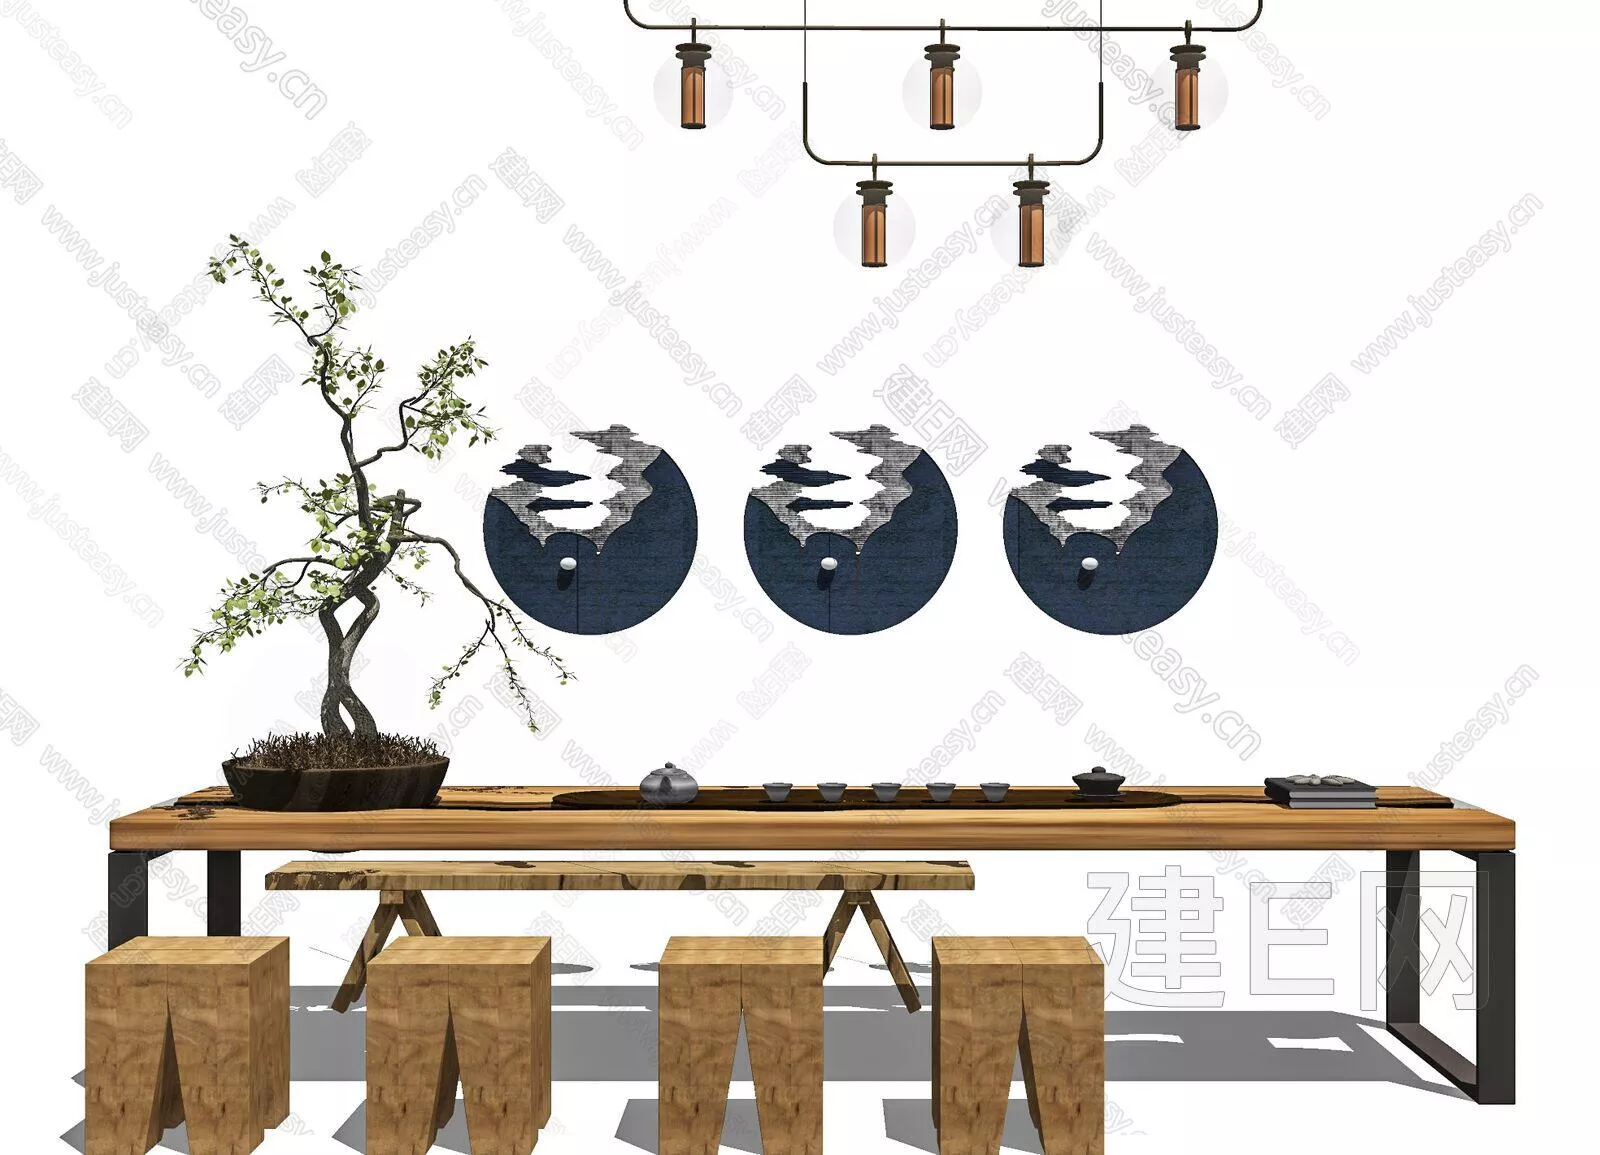 CHINESE TEA TABLE SET - SKETCHUP 3D MODEL - ENSCAPE - 110575753